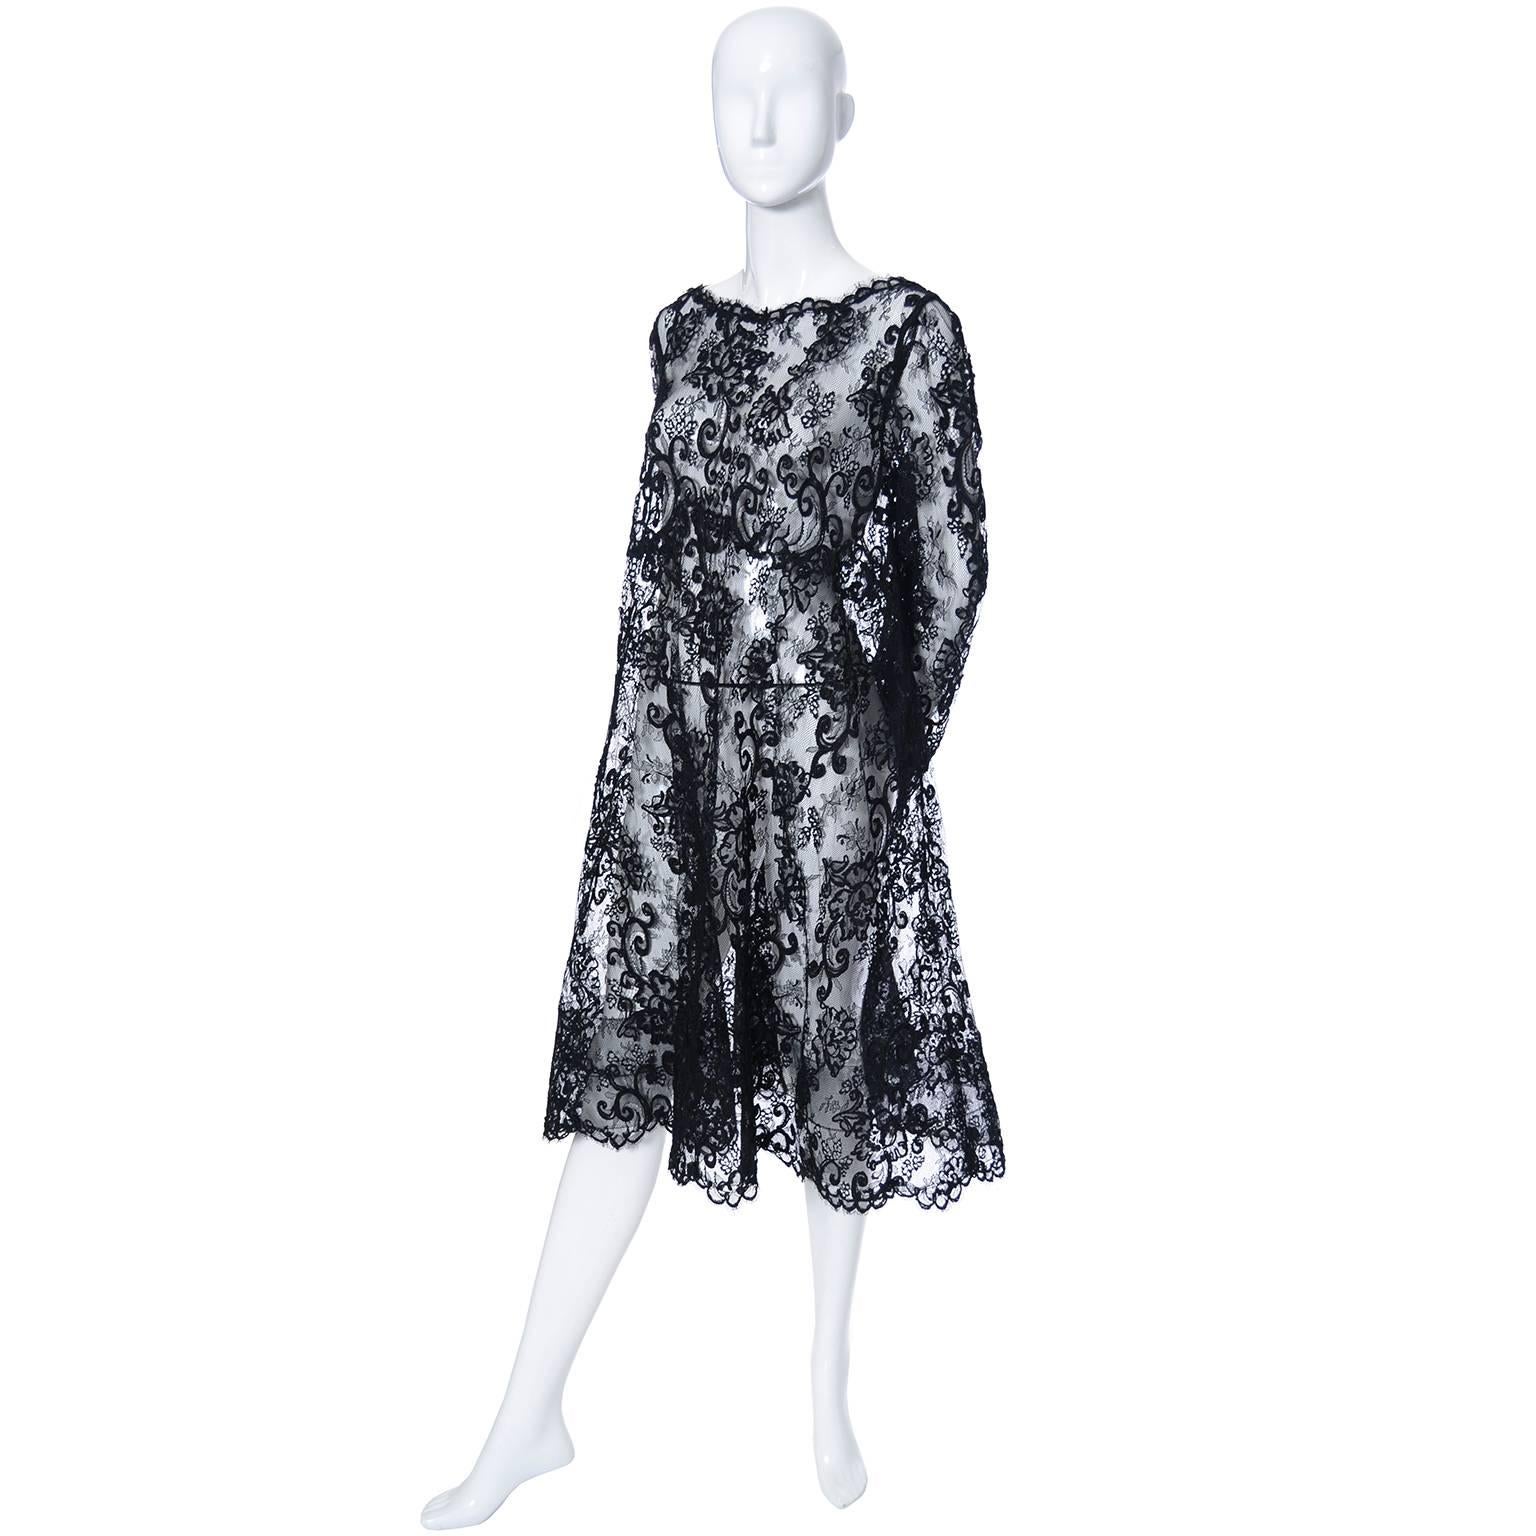 Women's All Lace Oscar de la Renta Dress Black Evening Vintage Trapeze Dress